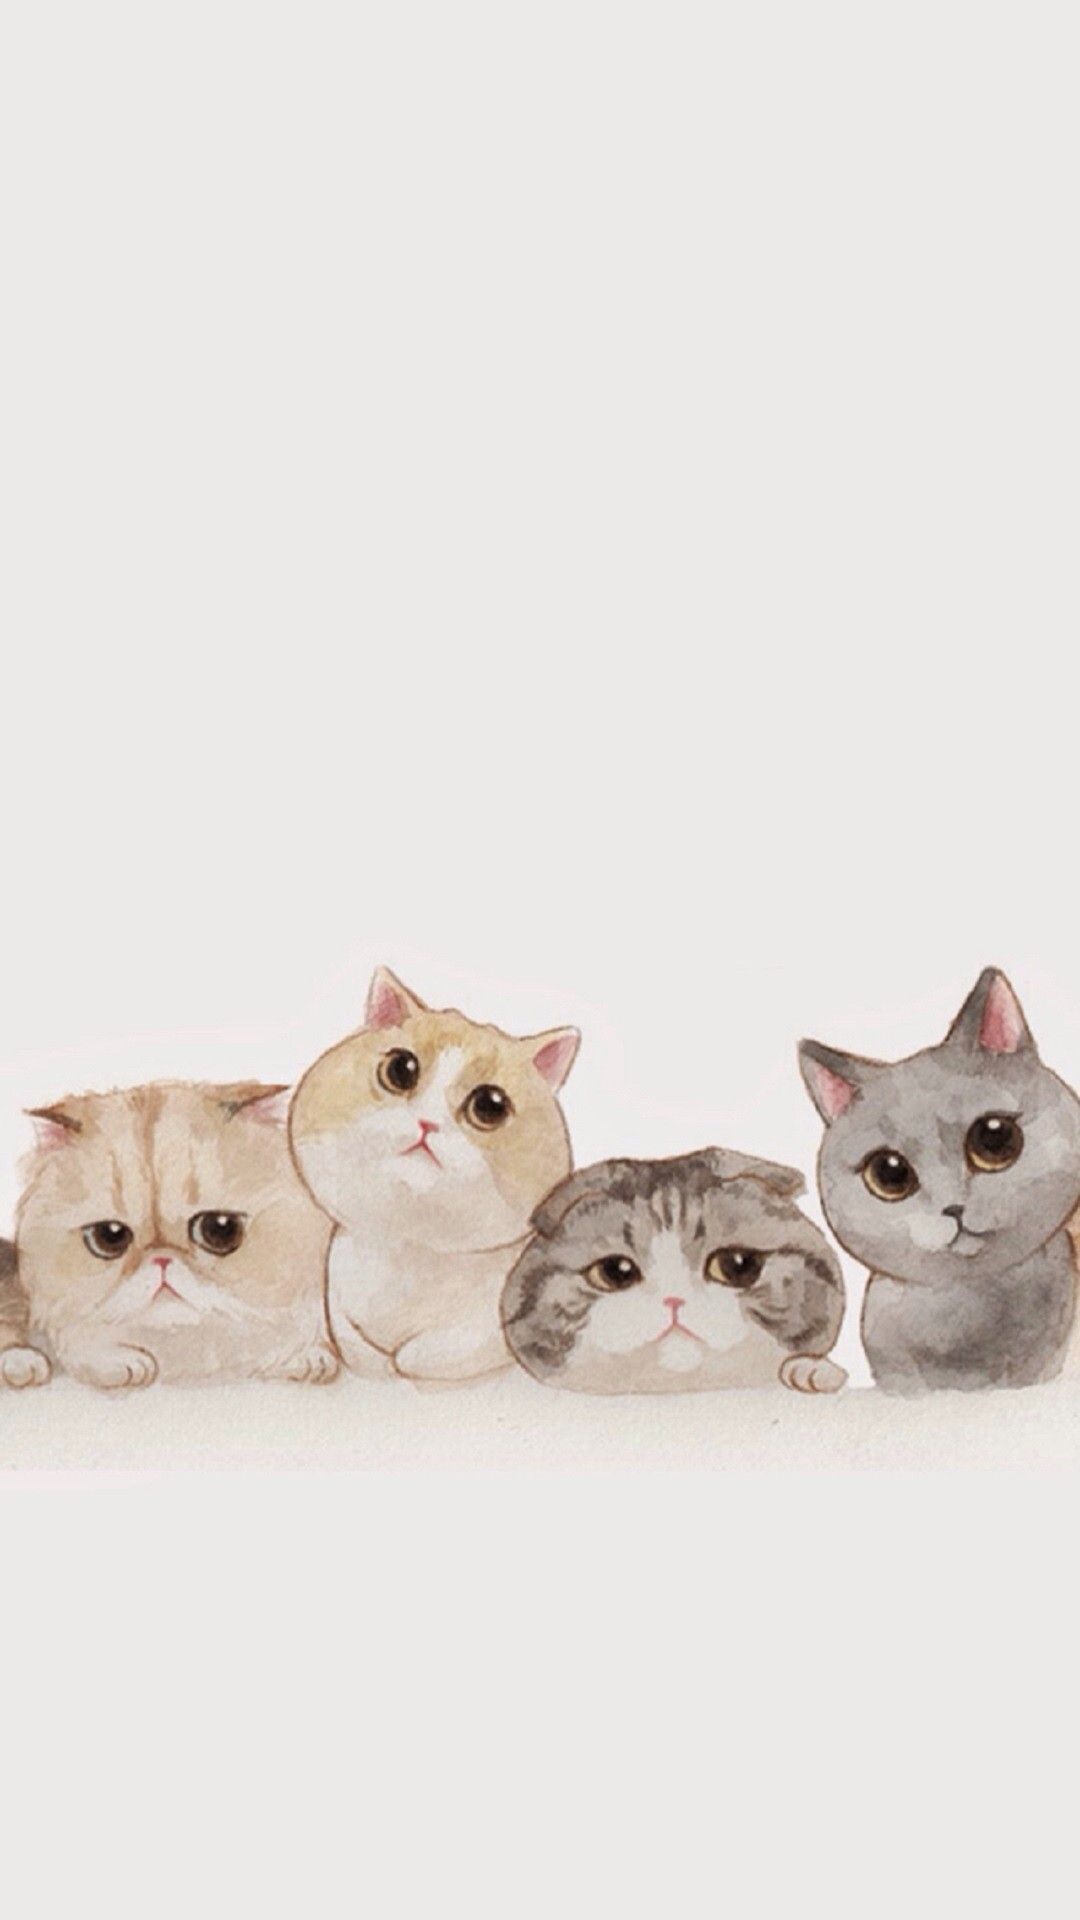 Cute Cat IPhone Wallpaper 87 images